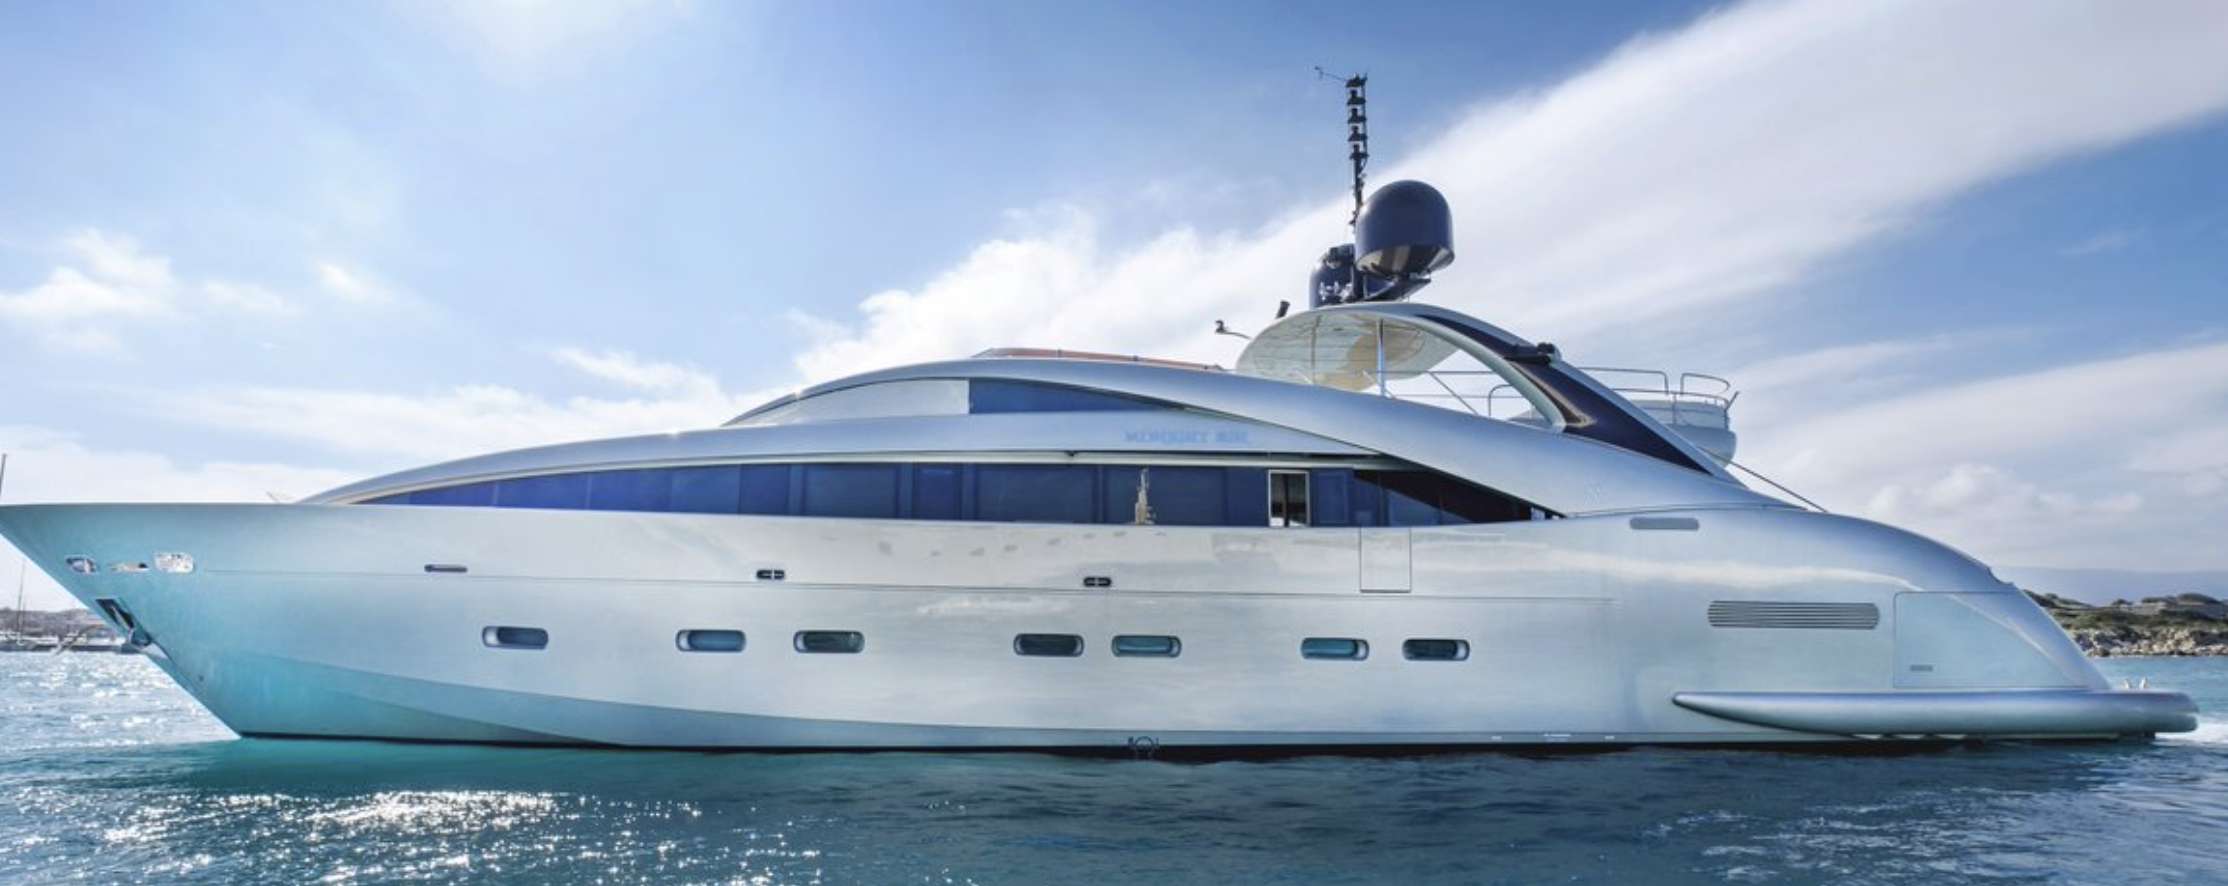 YCM 120 - Yacht Charter Alicante & Boat hire in Riviera, Corsica, Sardinia, Spain, Balearics, Caribbean 4